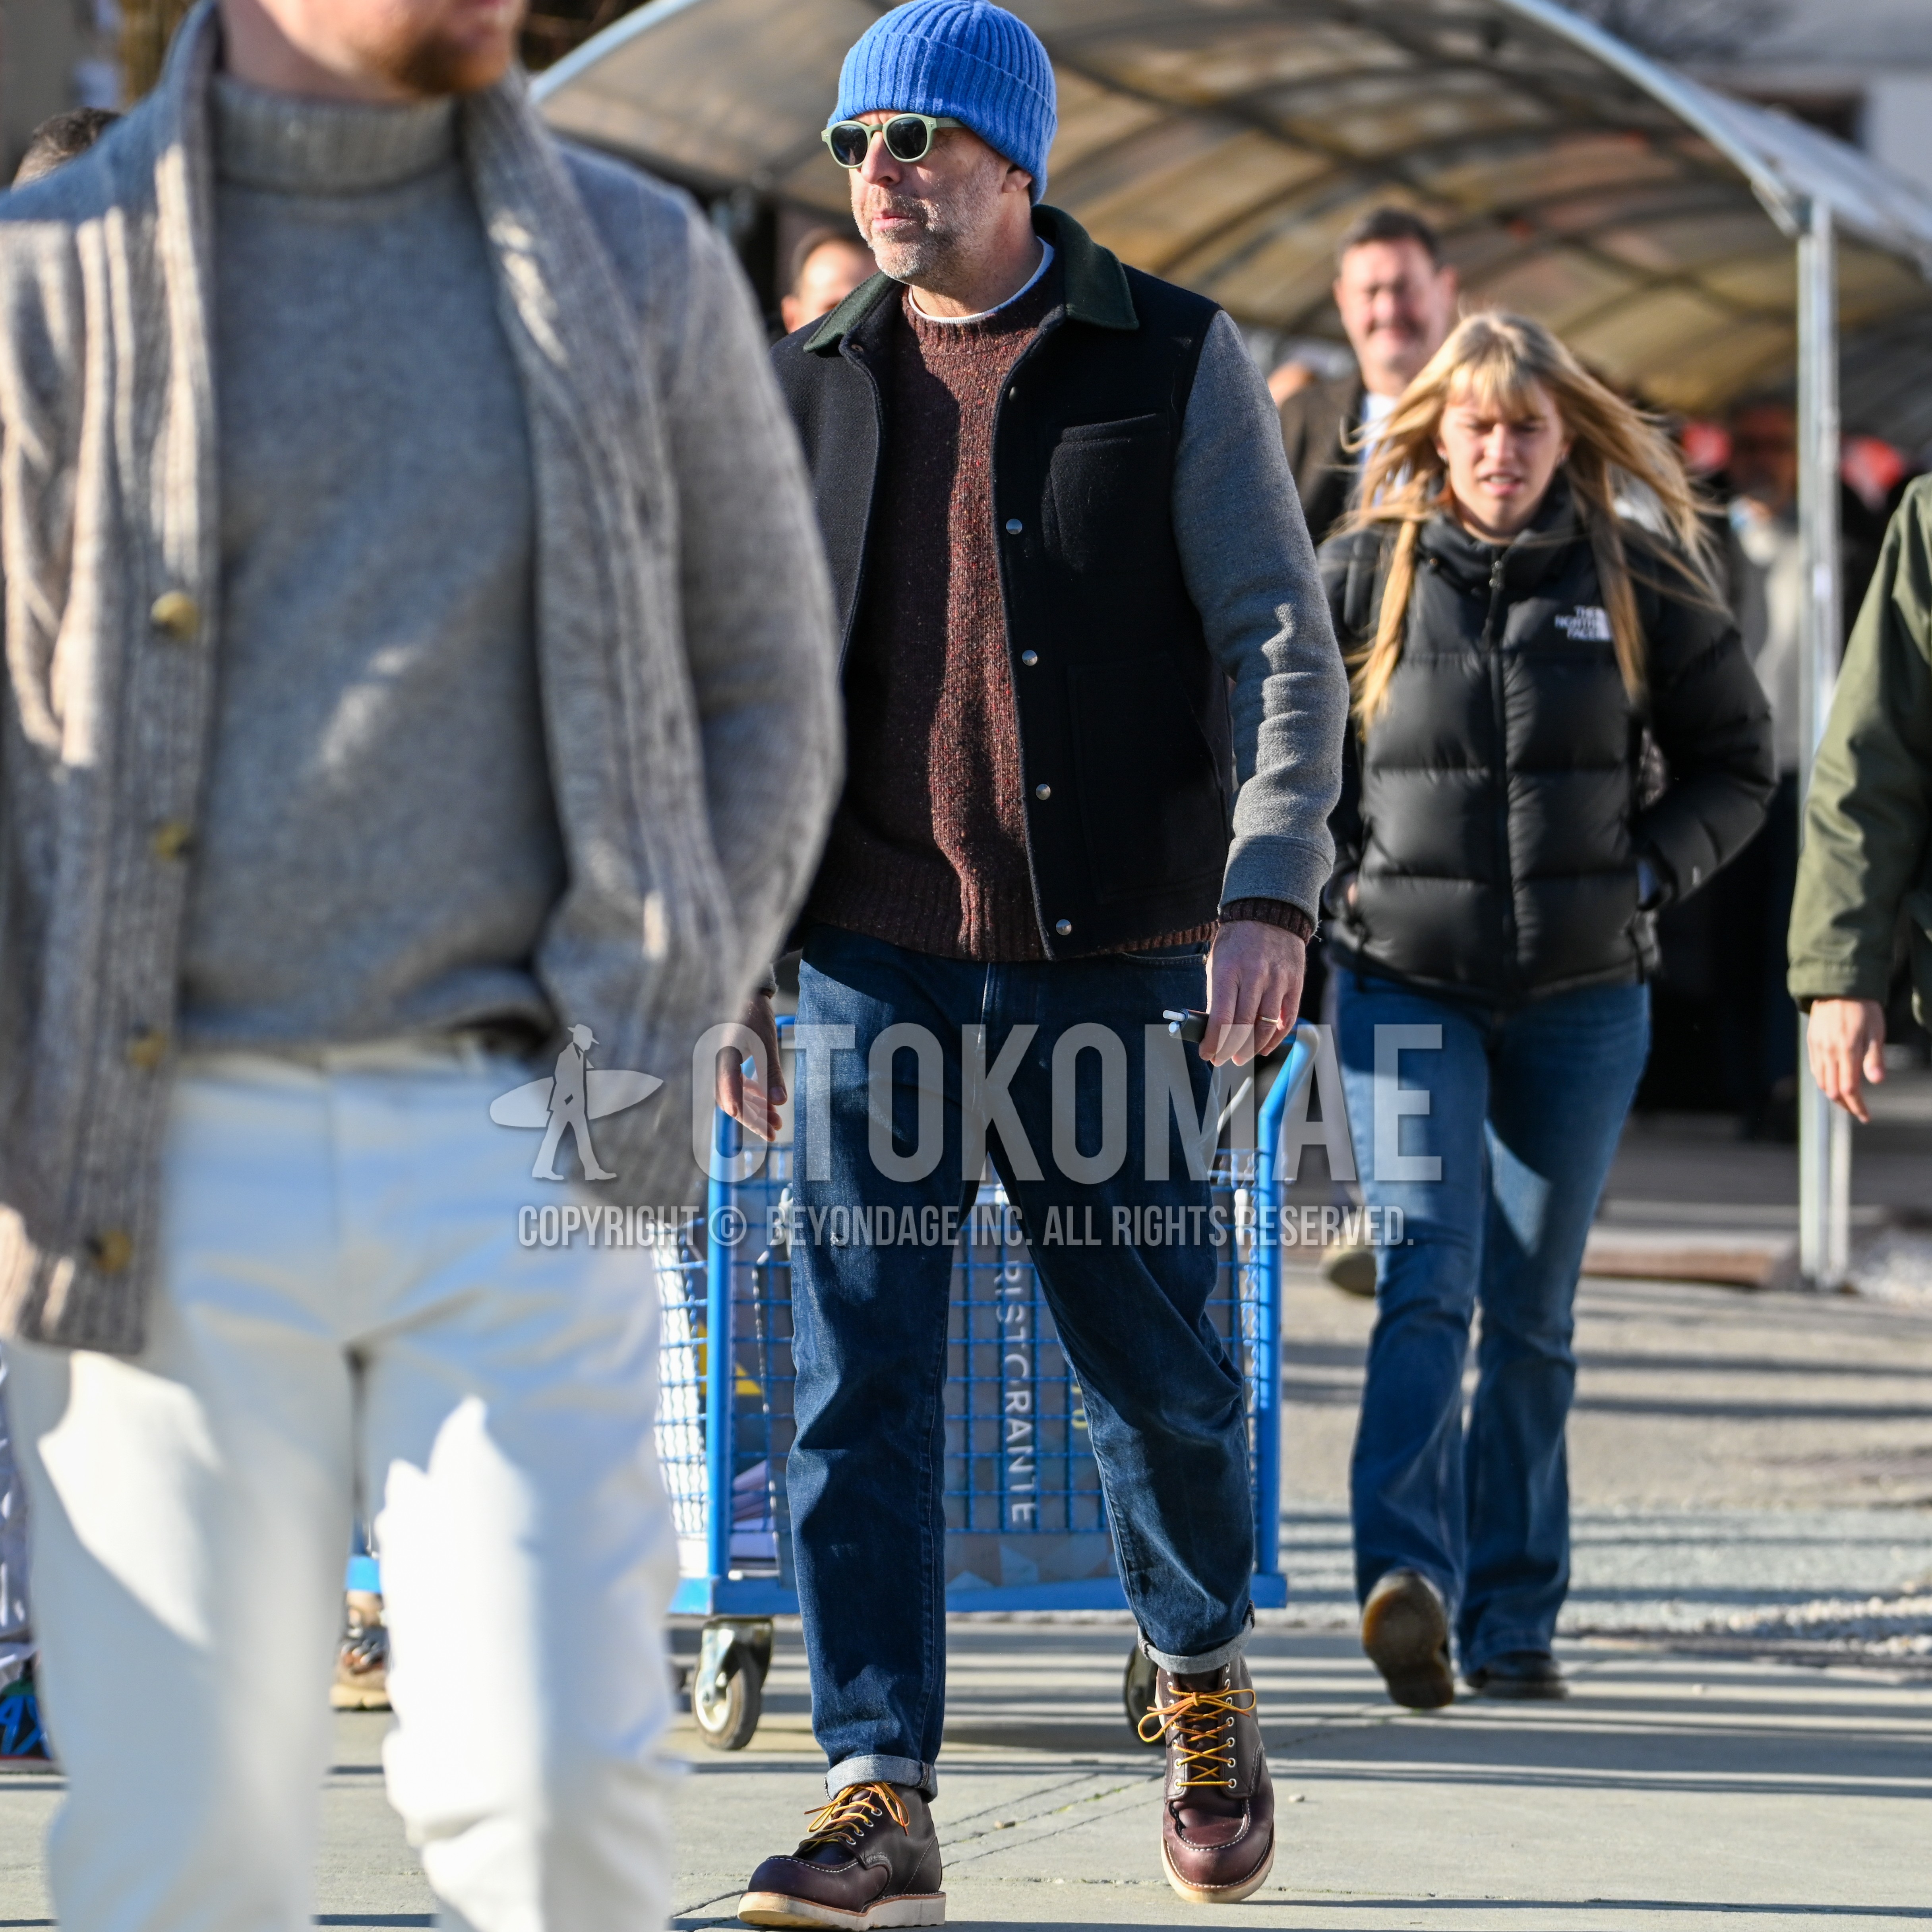 Men's autumn winter outfit with light blue plain knit cap, green plain sunglasses, gray dark gray outerwear shirt jacket, brown plain sweater, plain denim/jeans, brown work boots.